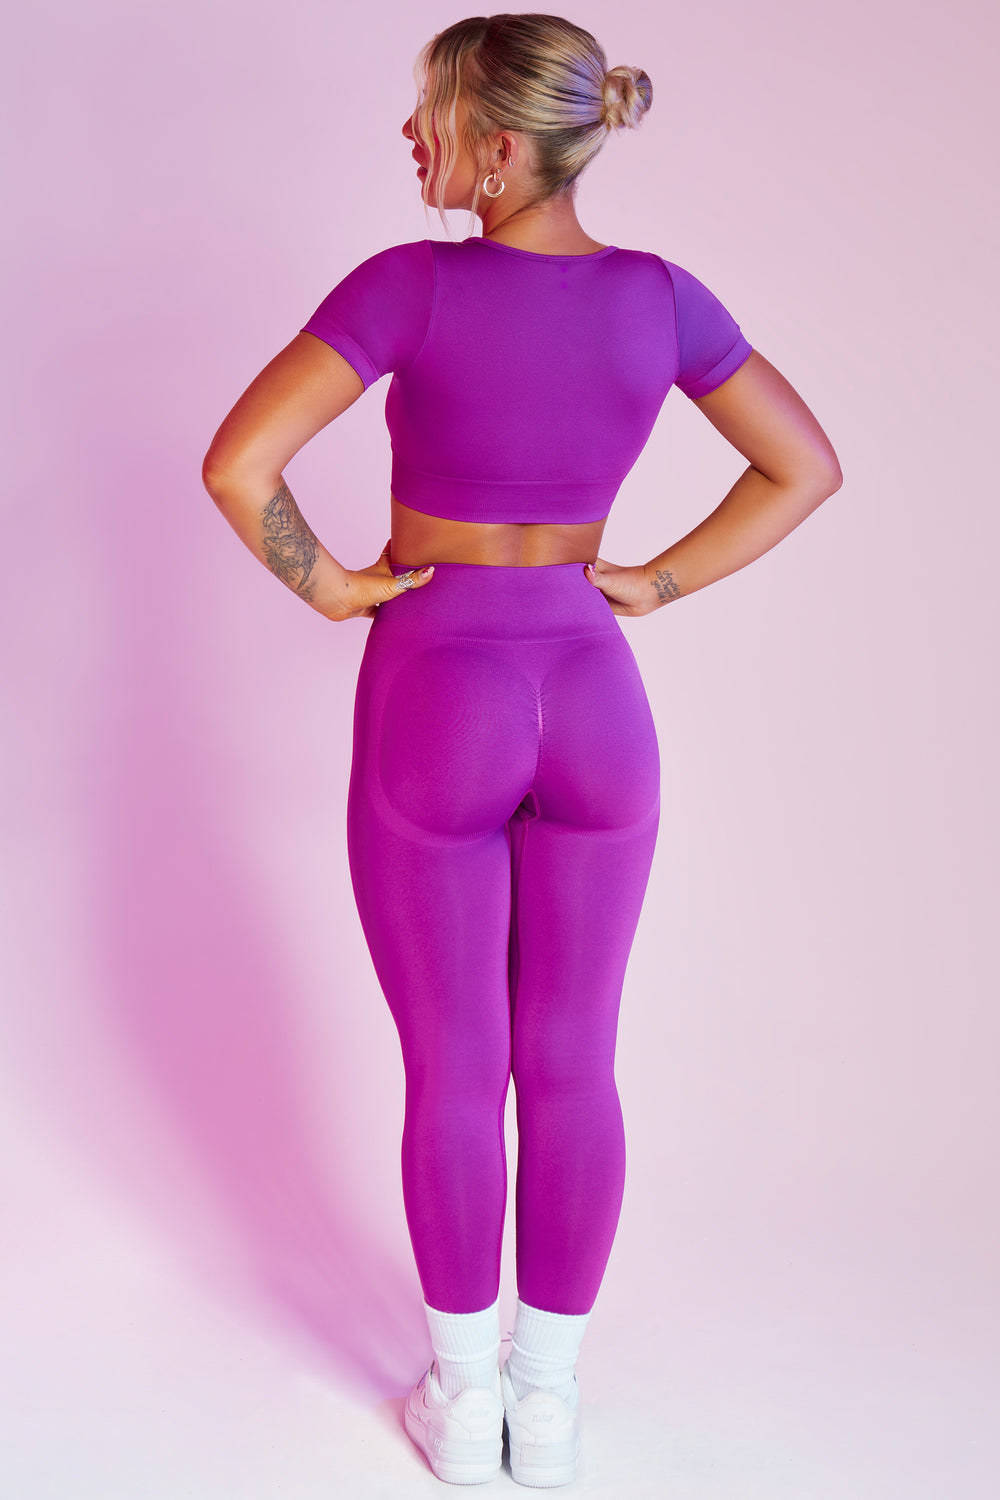 Women Purple Leggings Topshortsets